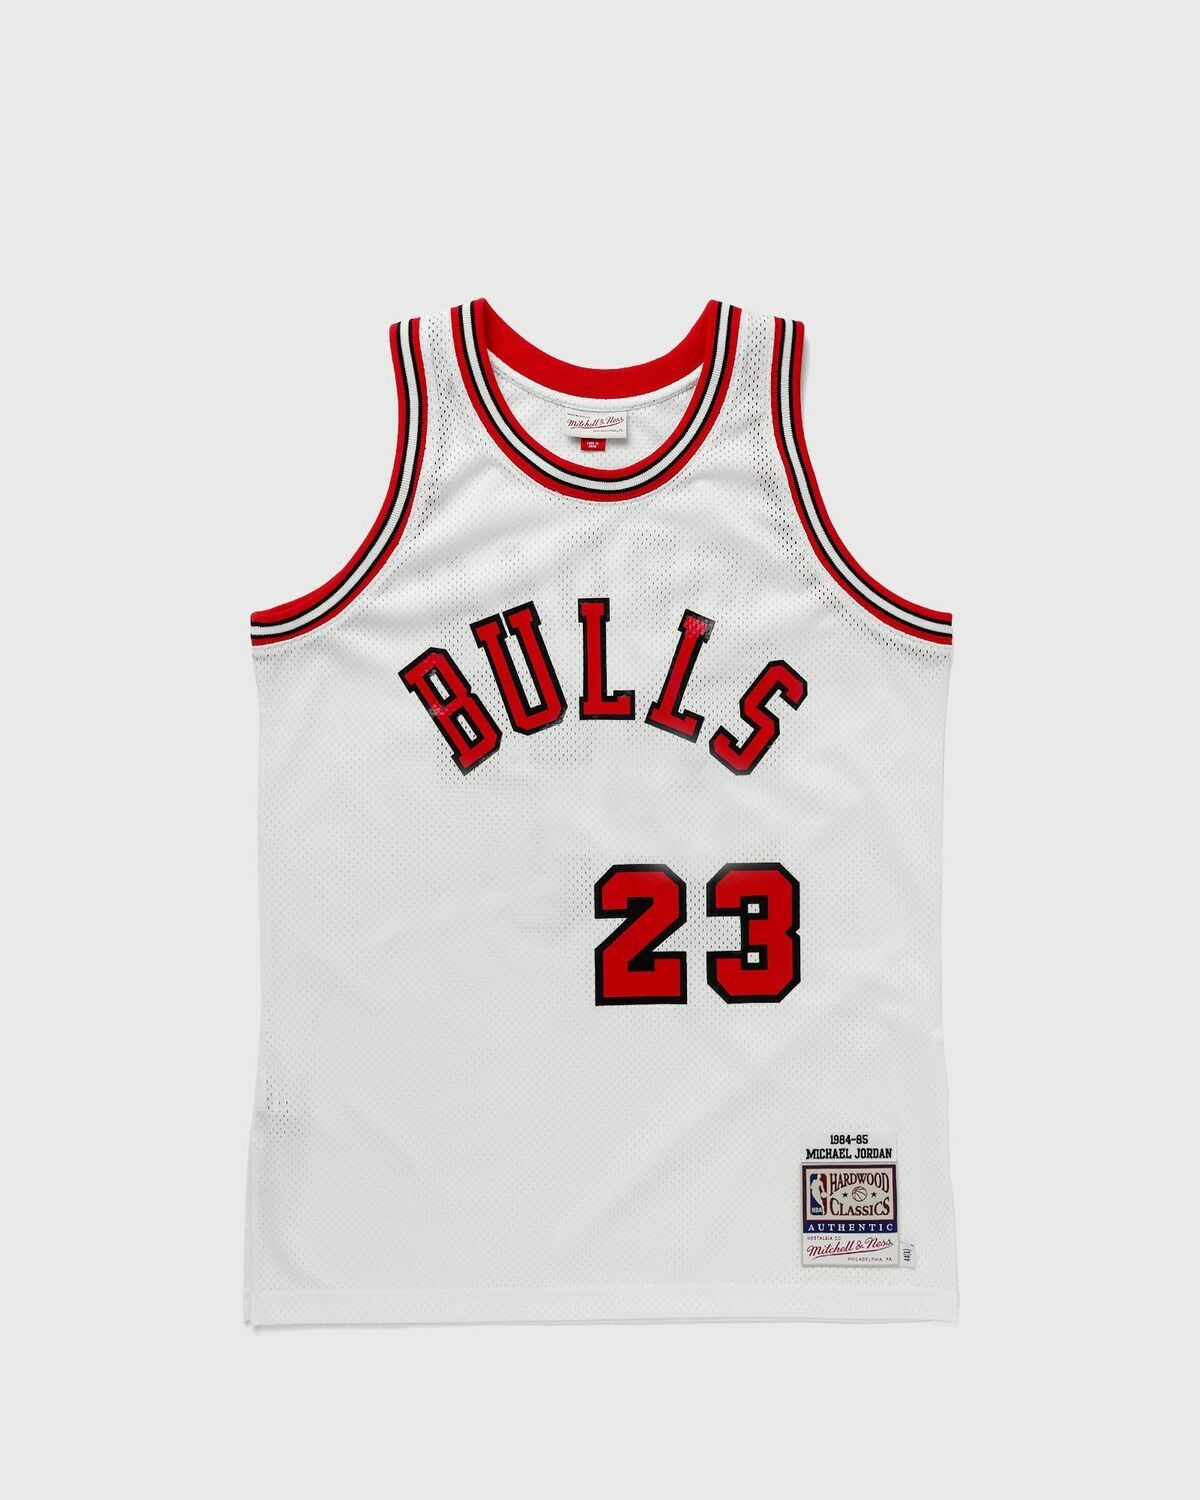 Mitchell & Ness Nba Authentic Jersey Chicago Bulls 1984 85 Michael Jordan #23 White - Mens - Jerseys